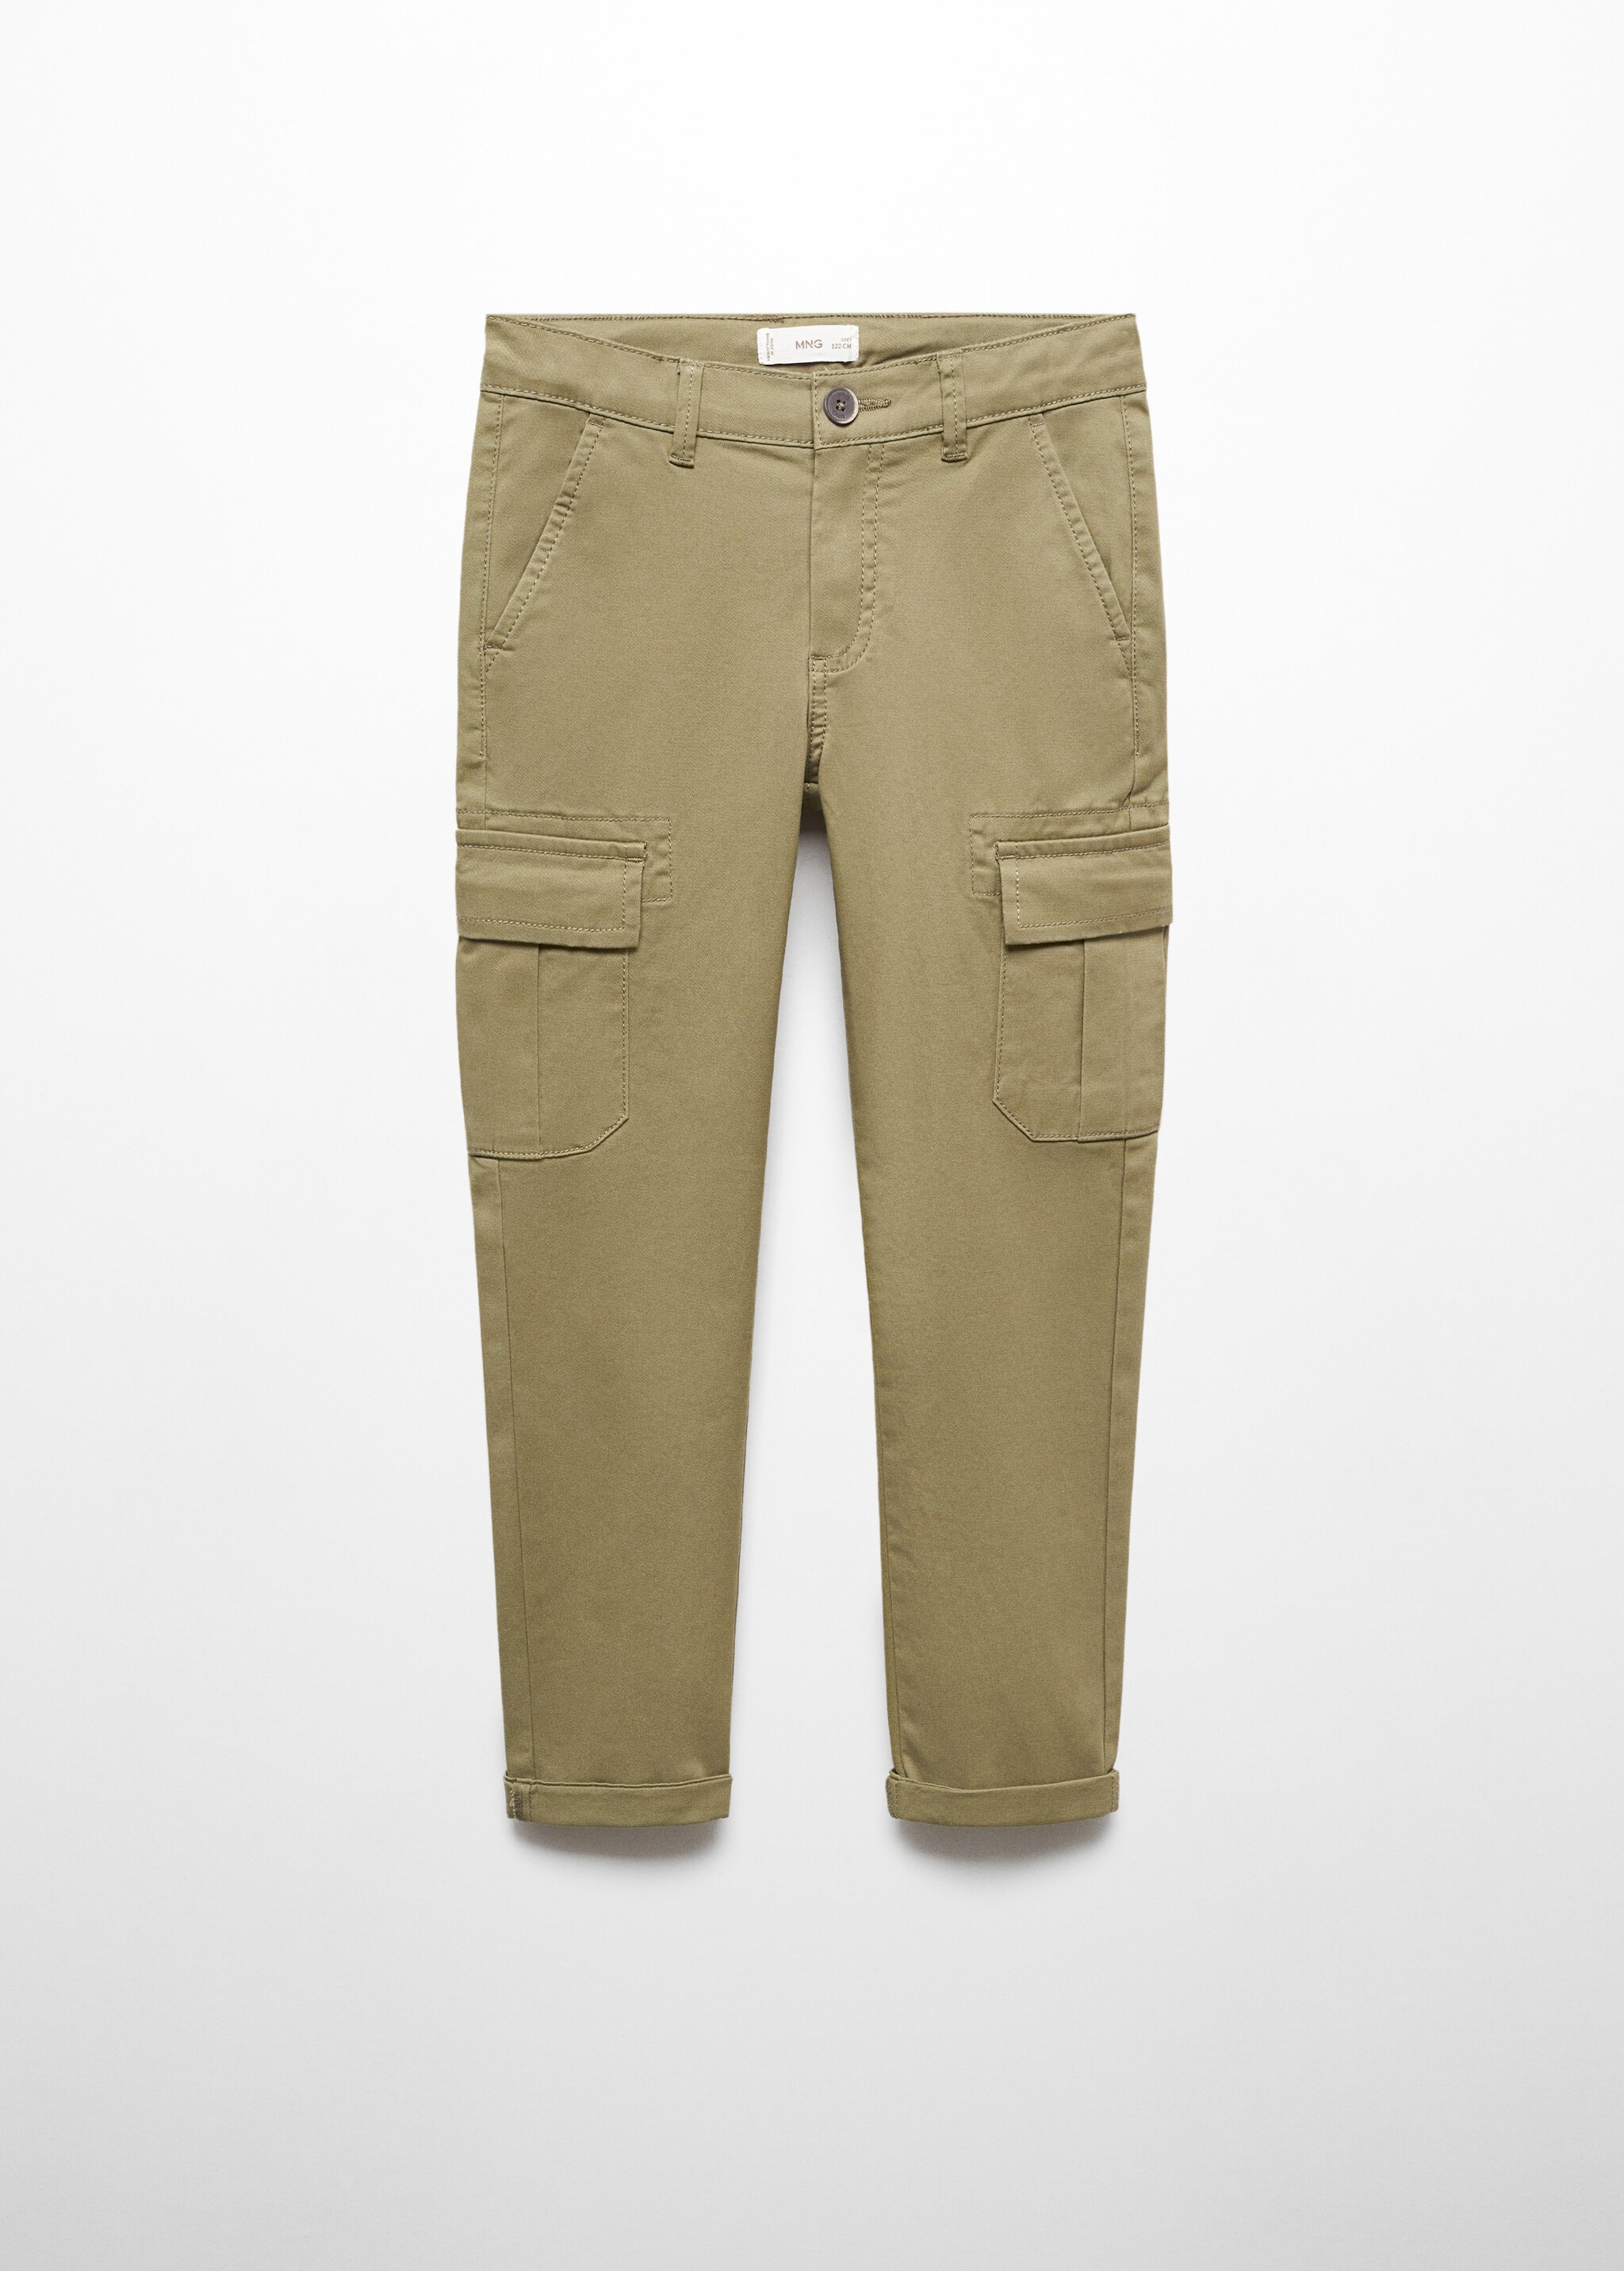 Pantalón regular fit cargo - Artículo sin modelo